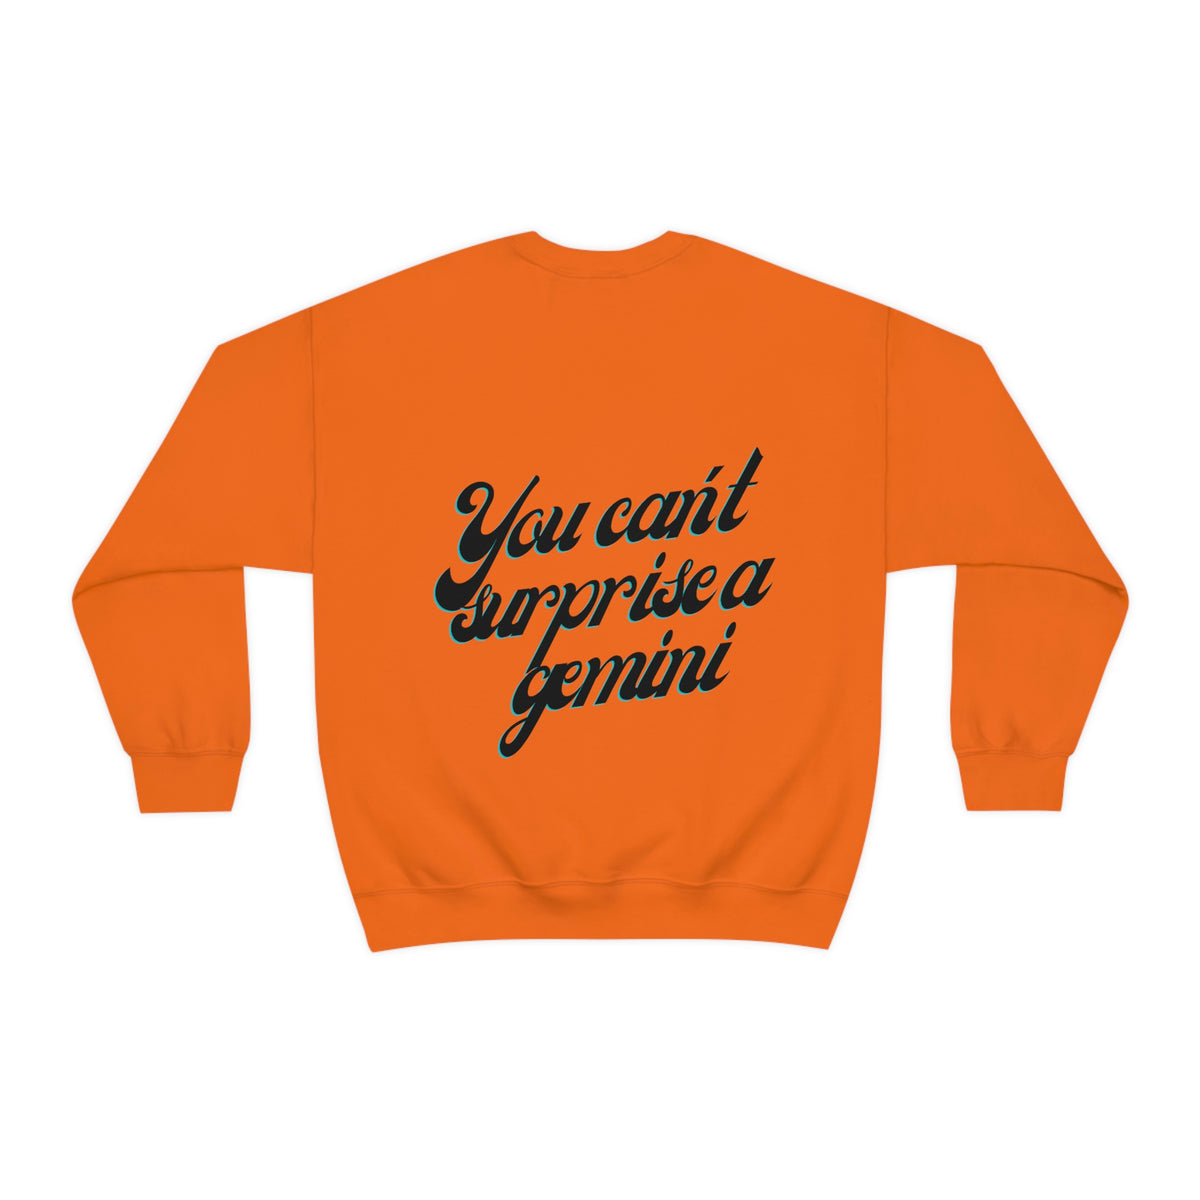 You Can't Surprise a Gemini Sweatshirt, Oversized Gemini Crewneck, Steve Lacy Bad Habit Long Sleeve